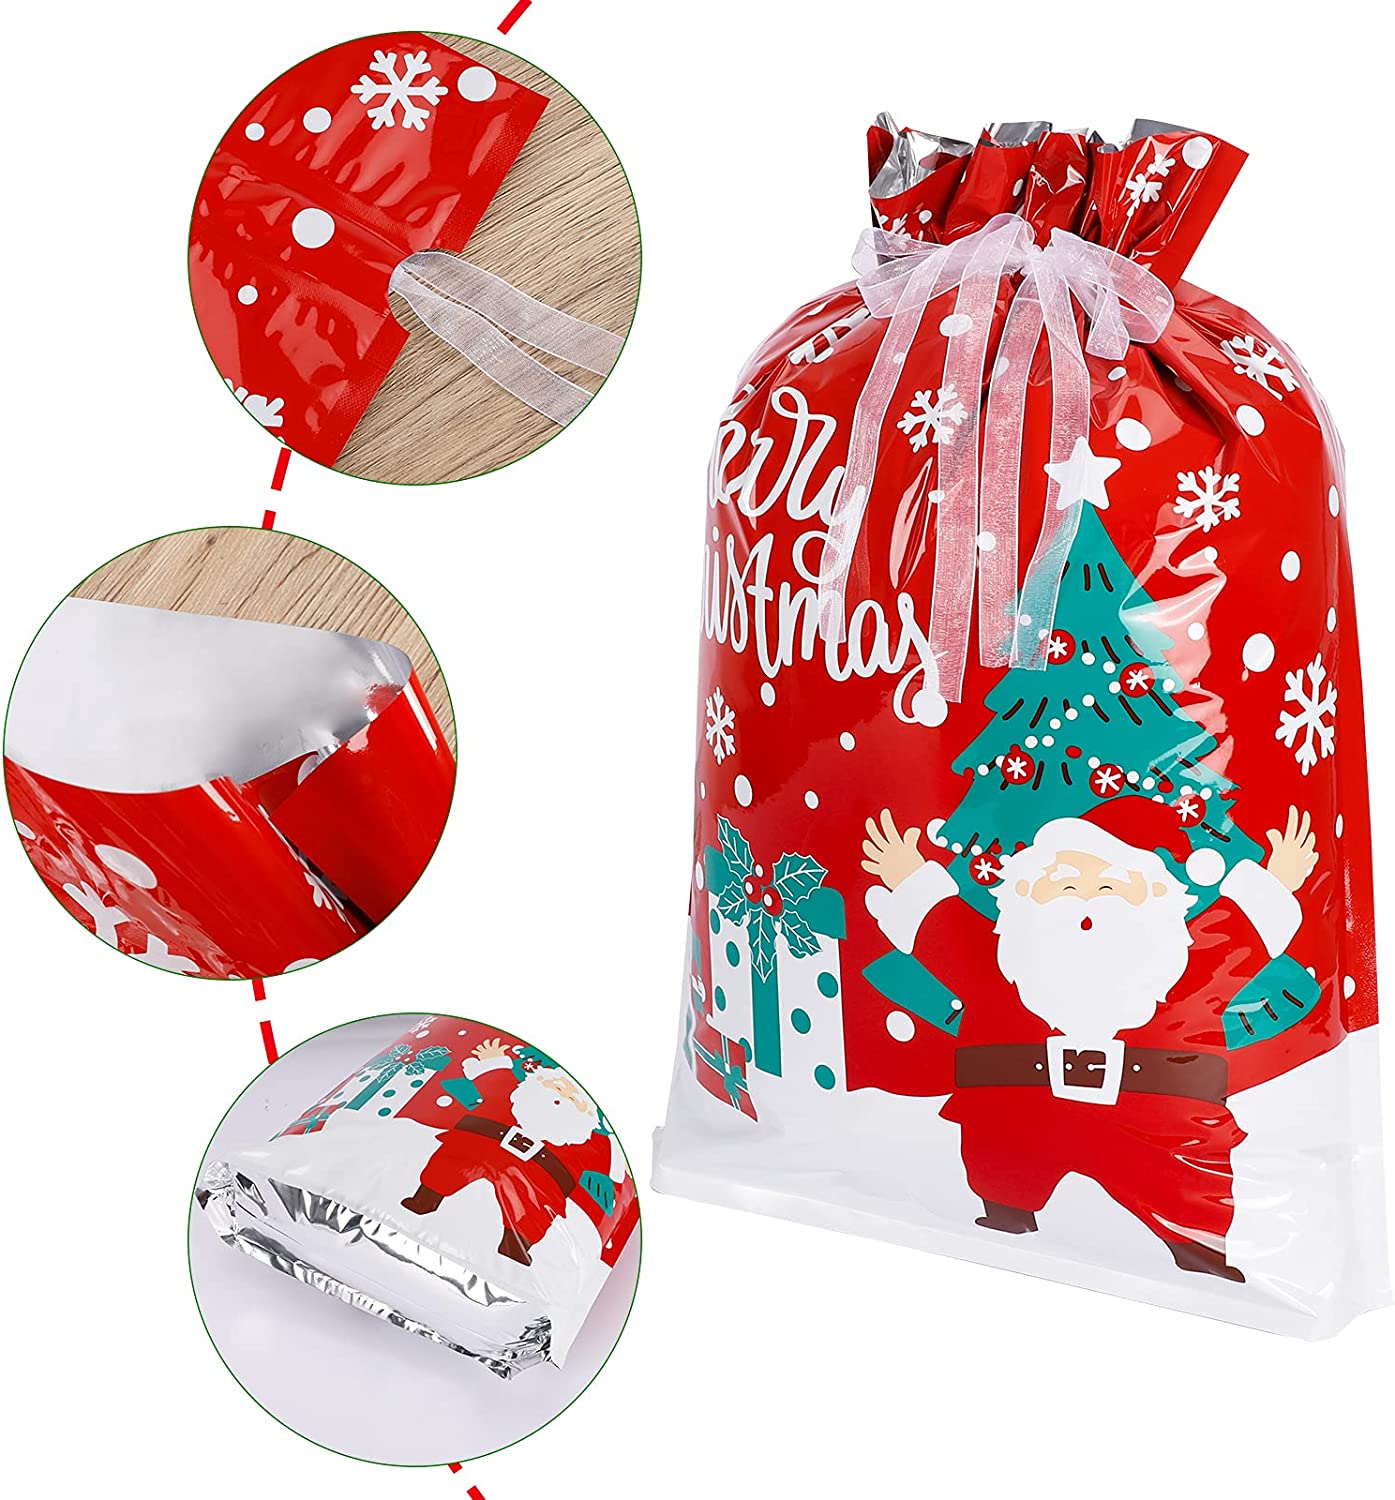 Custom Printed Spot Gift Plastic Packaging Bags Christmas gift packaging bags printed